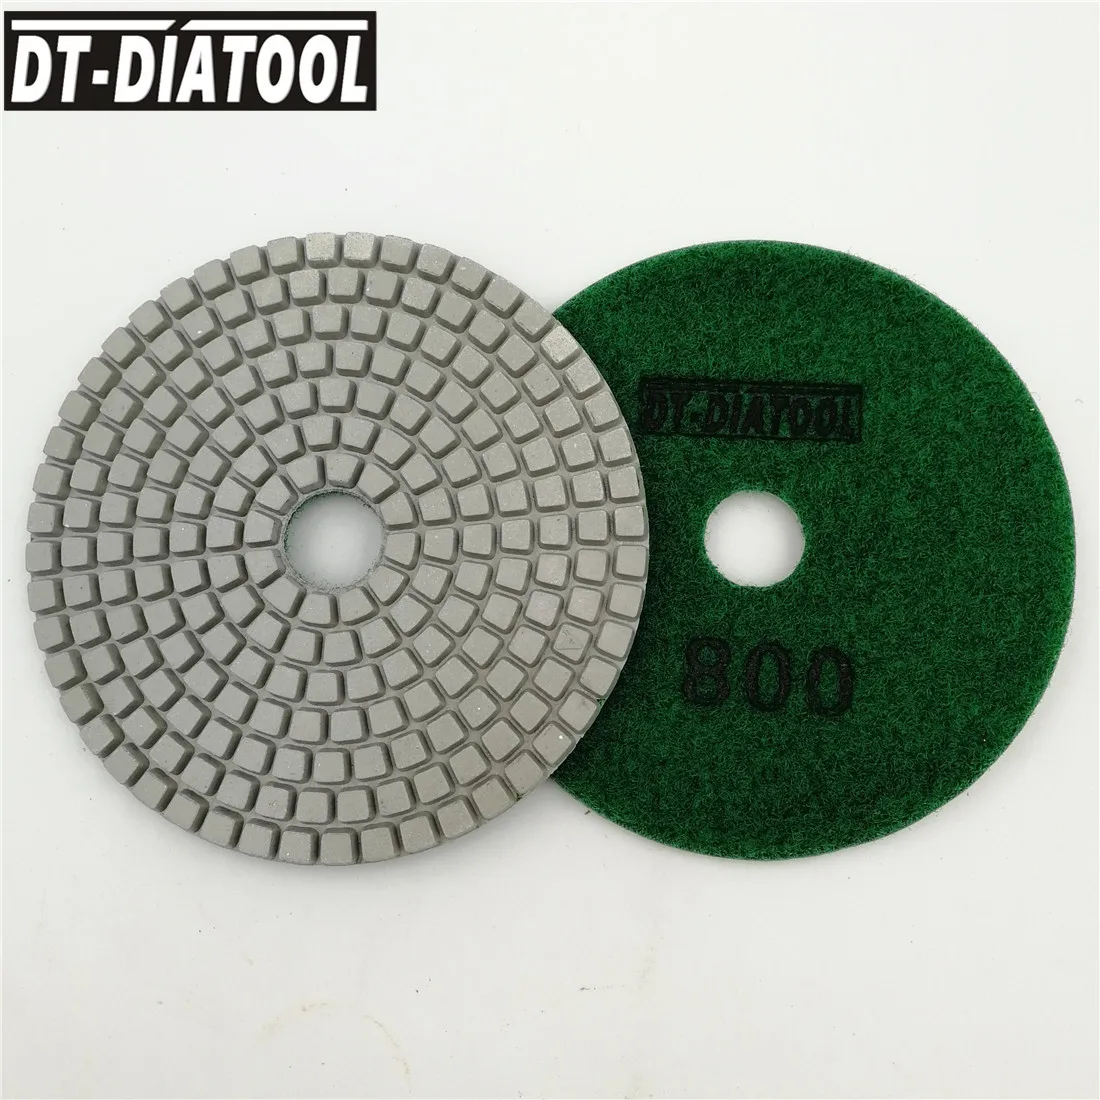 

DT-DIATOOL 10pcs Diameter 4"/100mm Diamond Wet Polishing Pads #800 White Resin Bond Natural Stone Granite Marble Sanding Discs